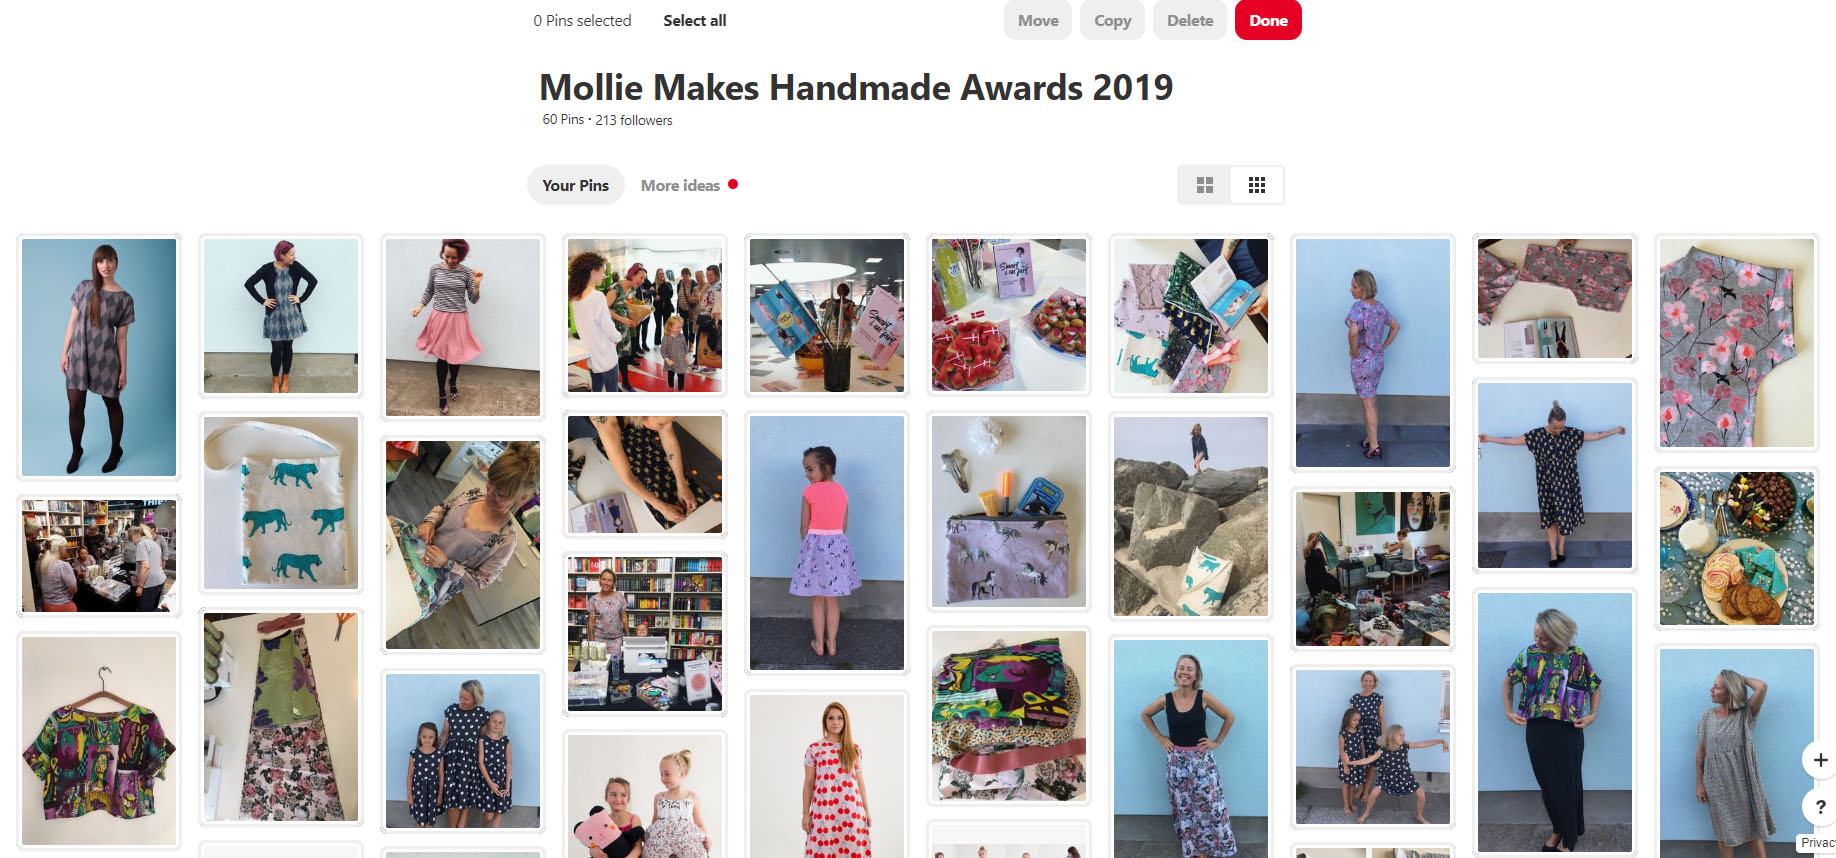 Entering the Mollie Makes Handmade Awards